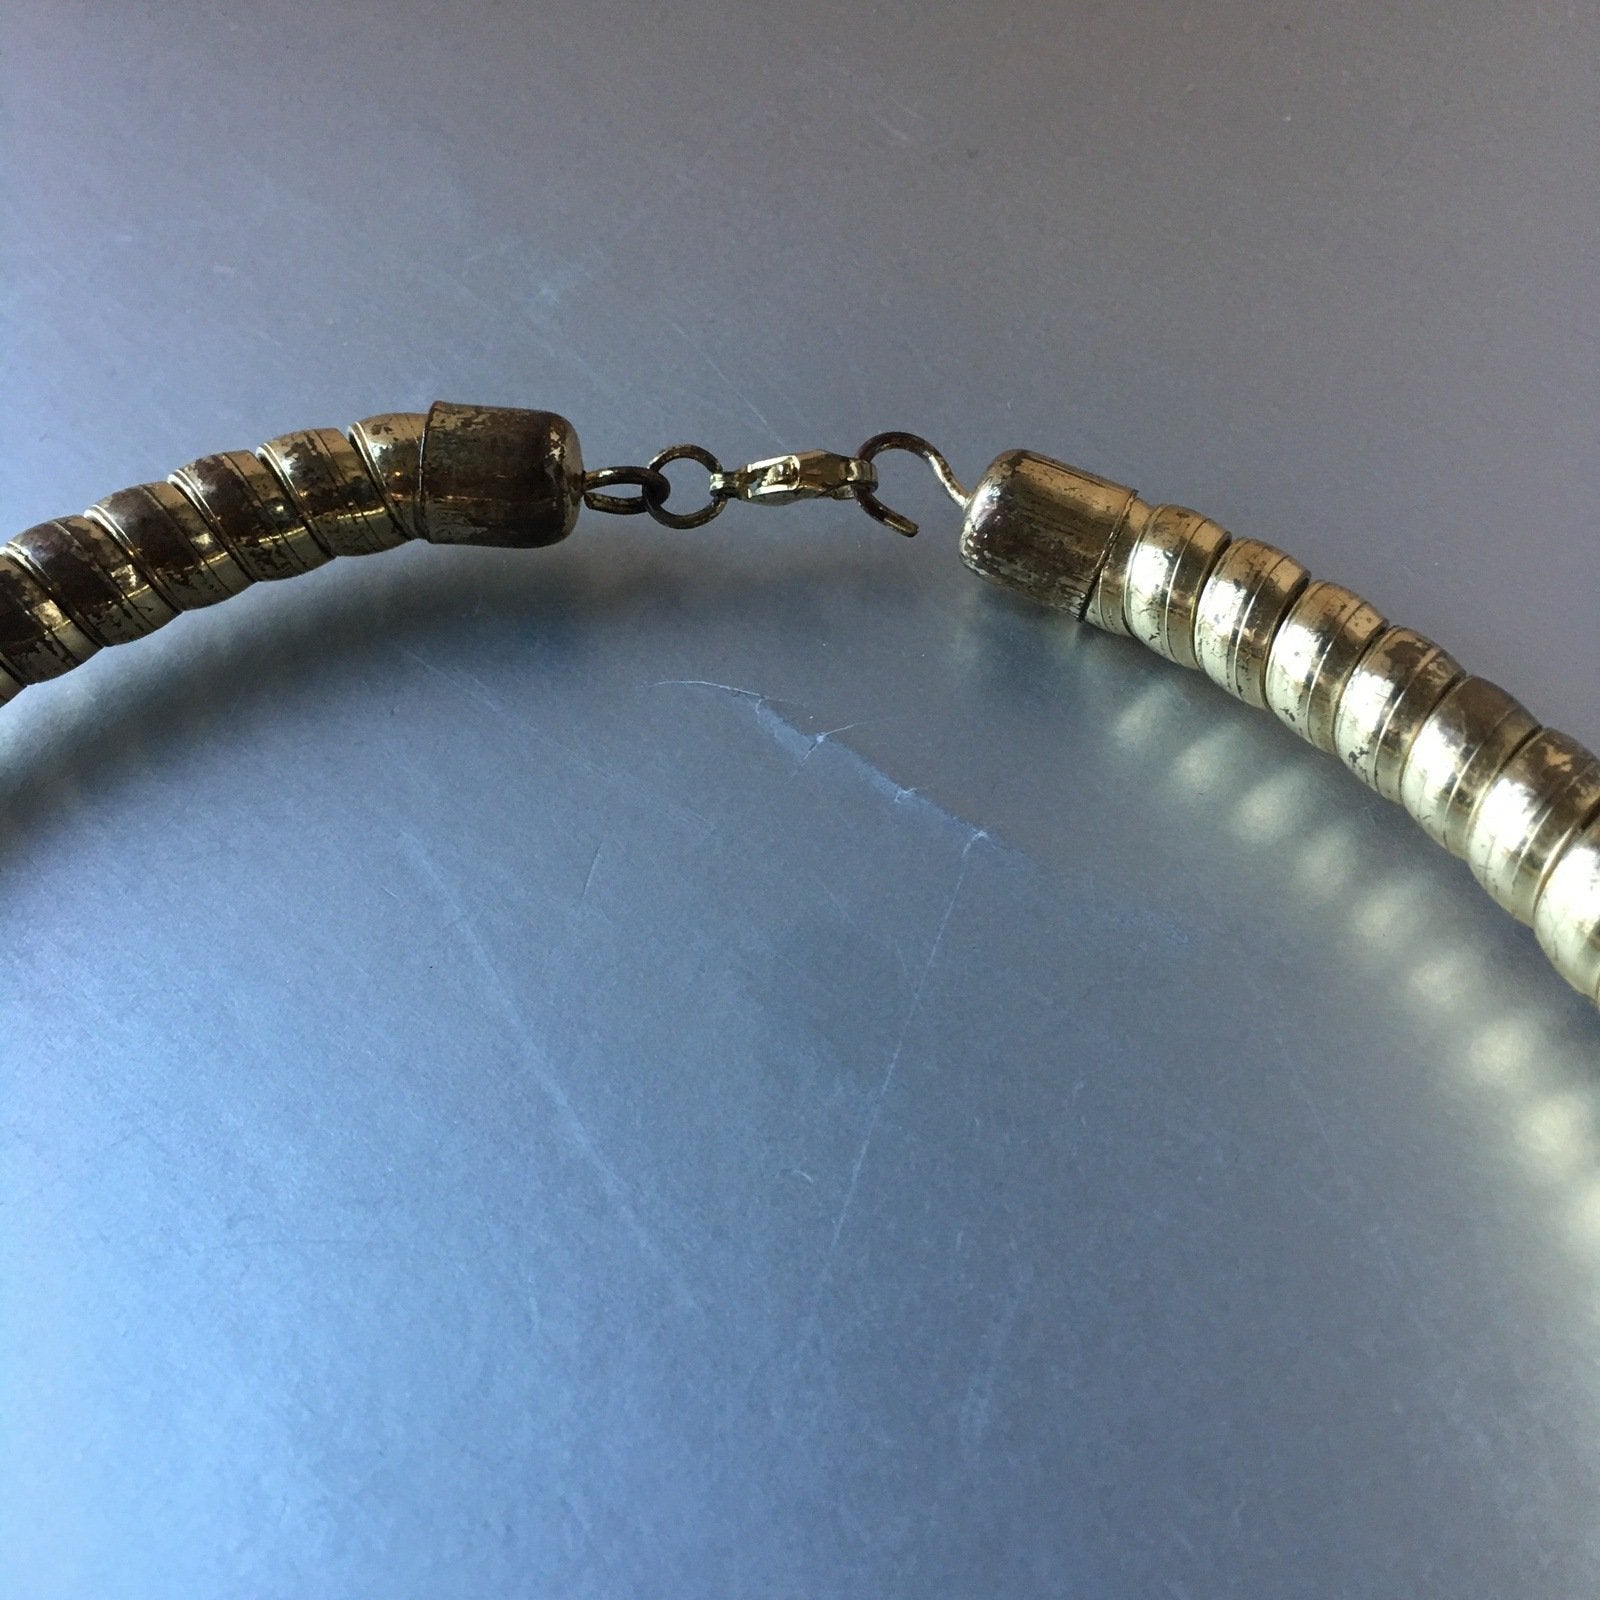 Golden Spirals Metallic Choker Necklace Vintage Jewelry